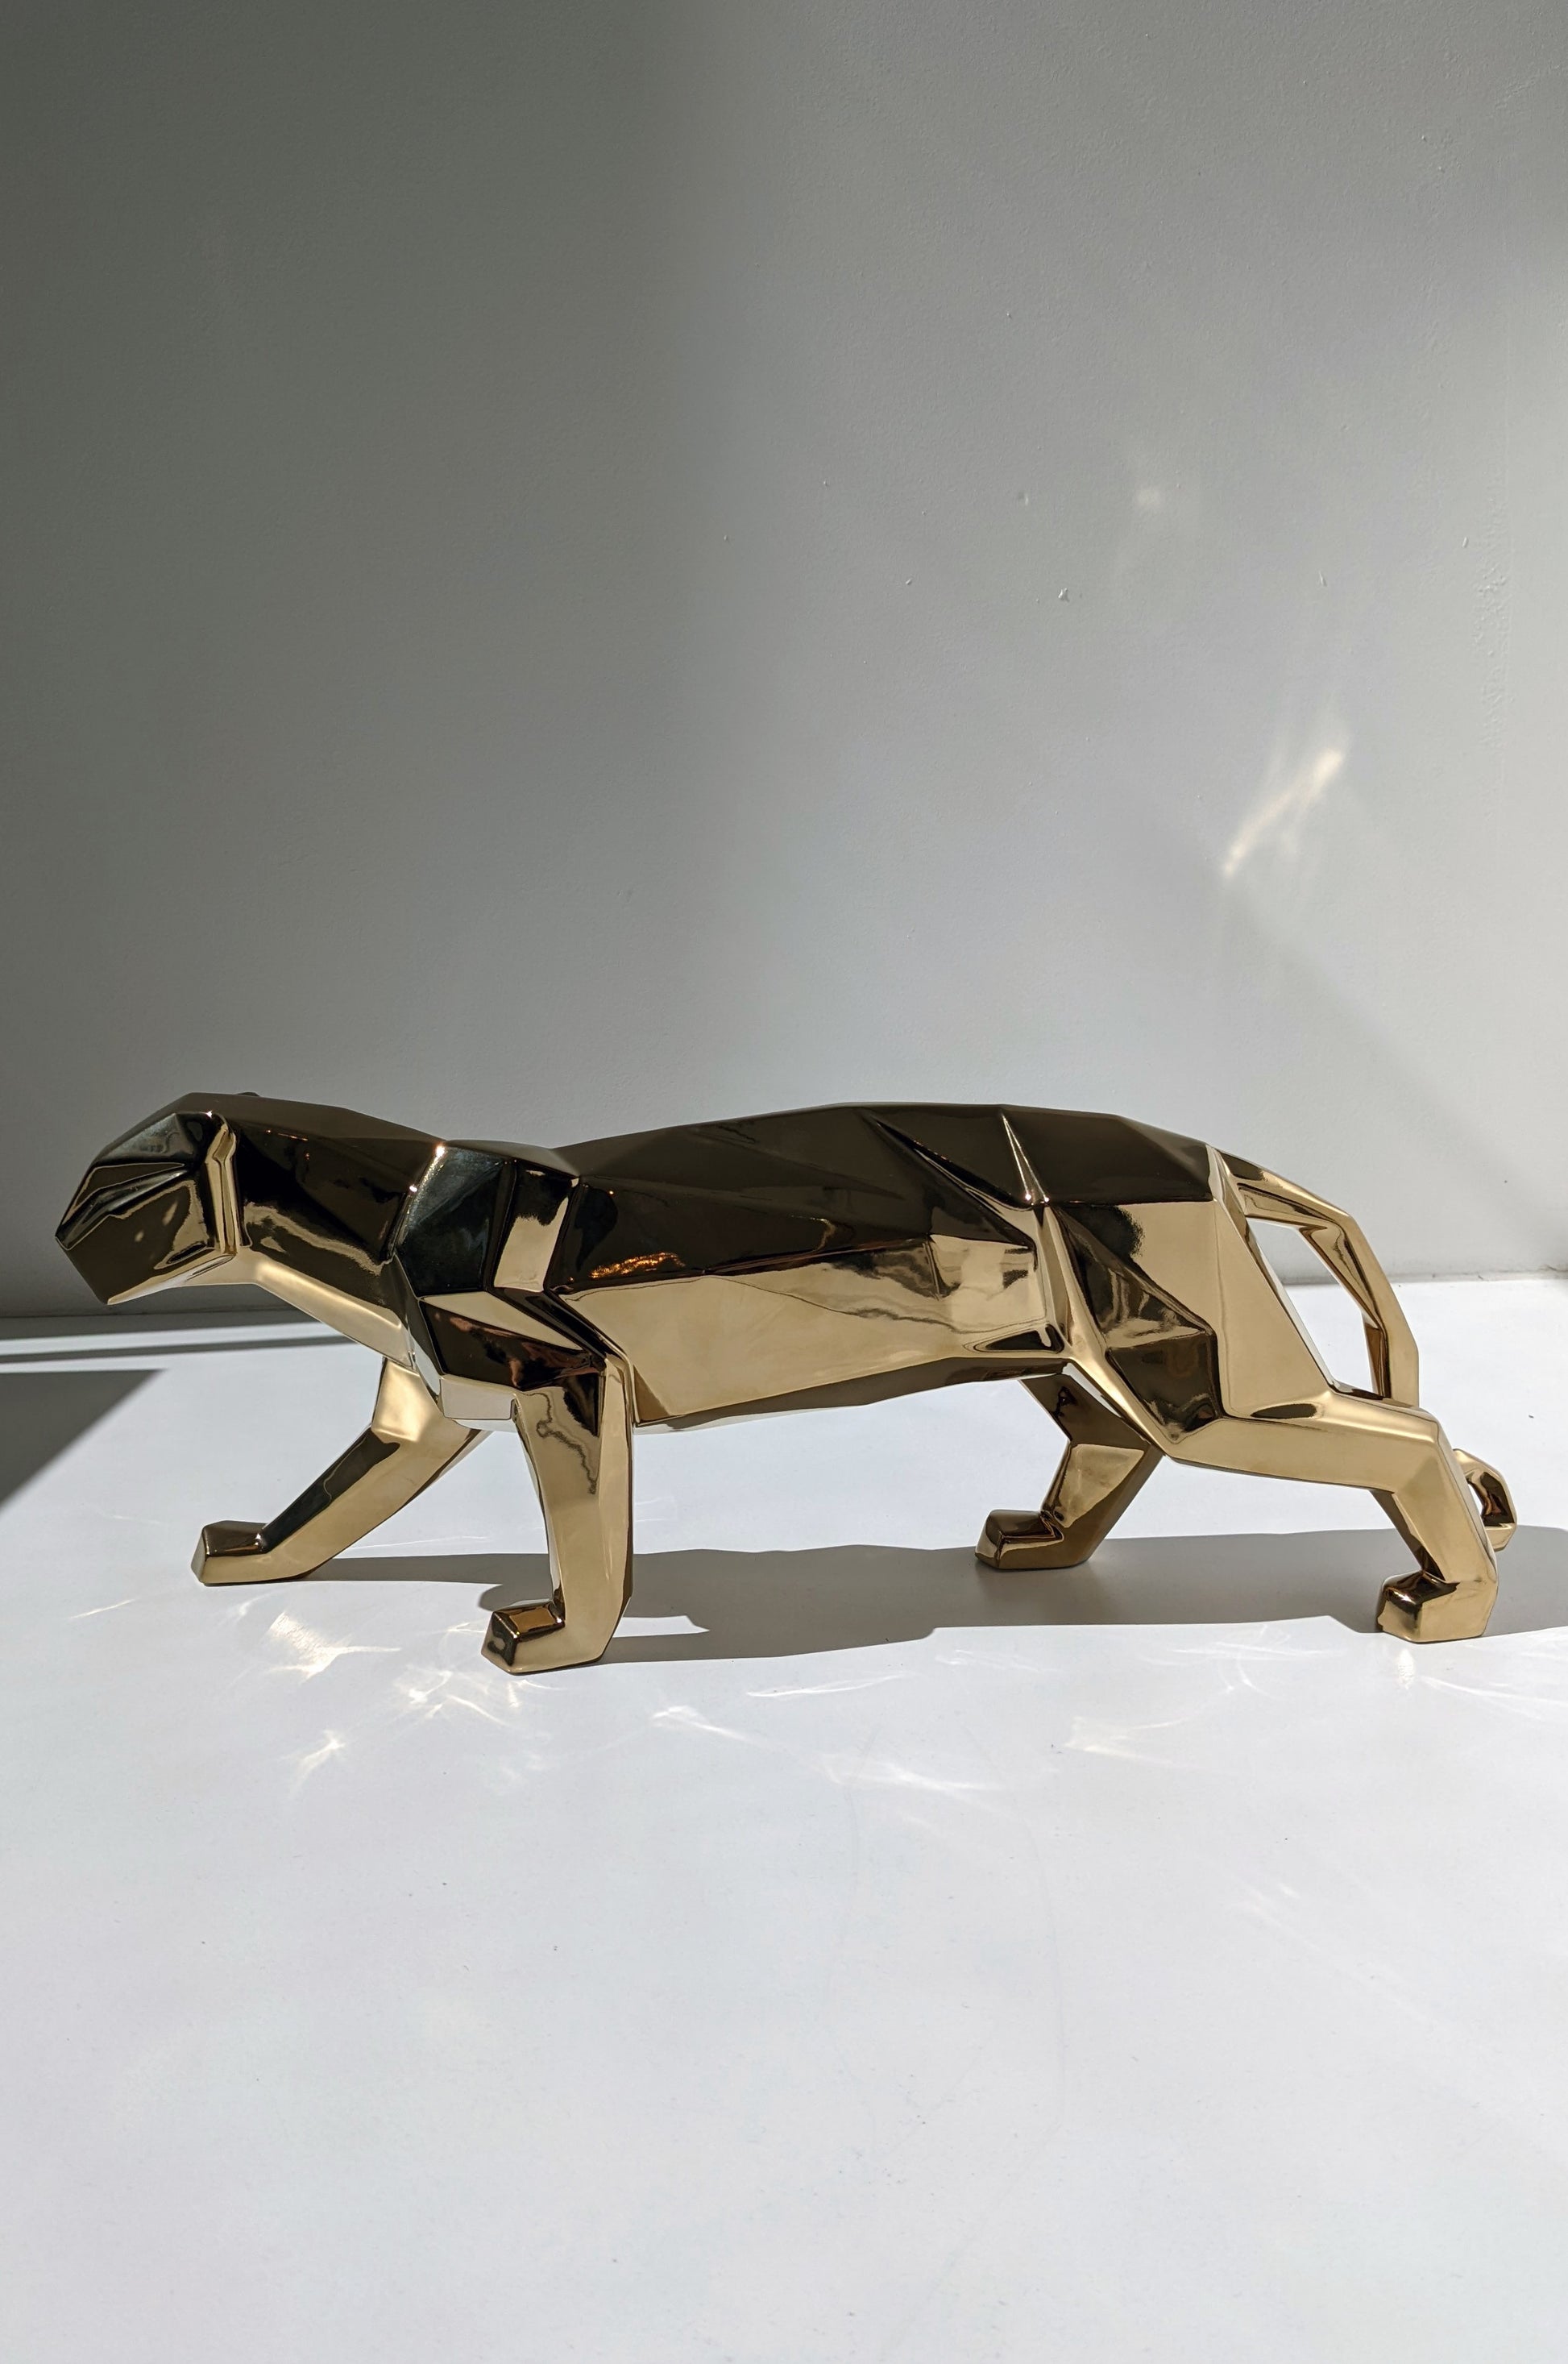 Origami Panther Figurine - FormFluent